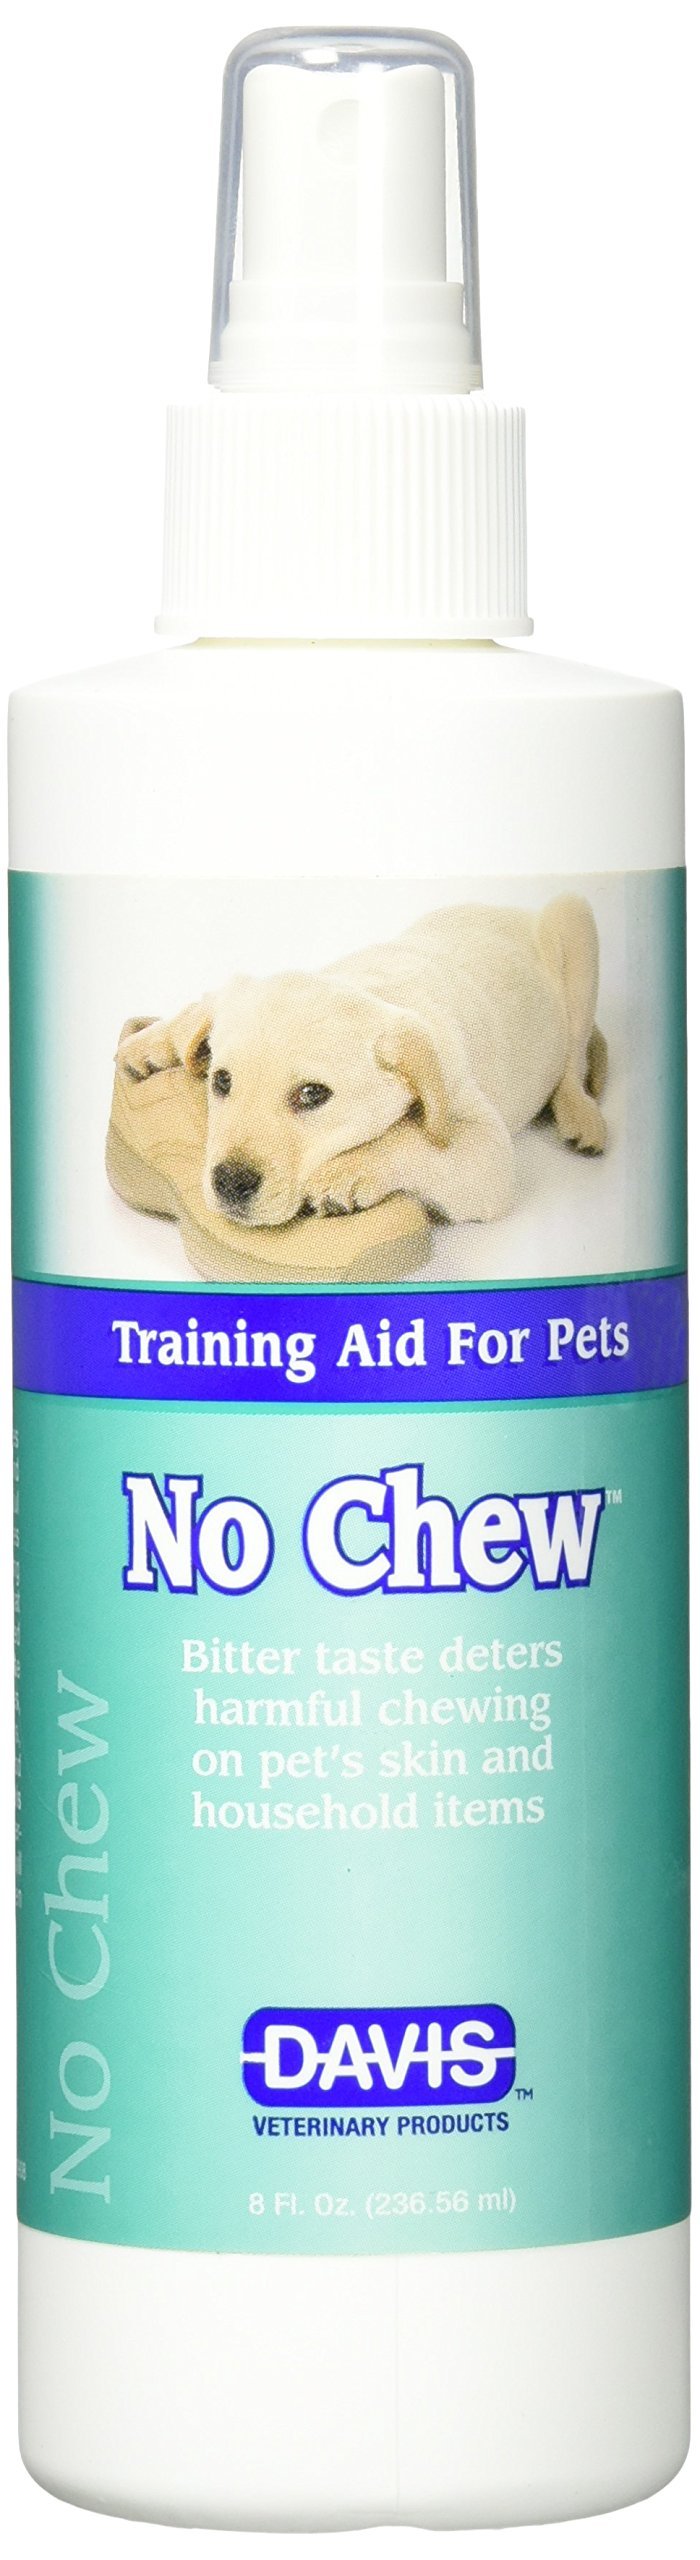 [Australia] - Davis No Chew Training Aid for Pets Spray, 8 oz 